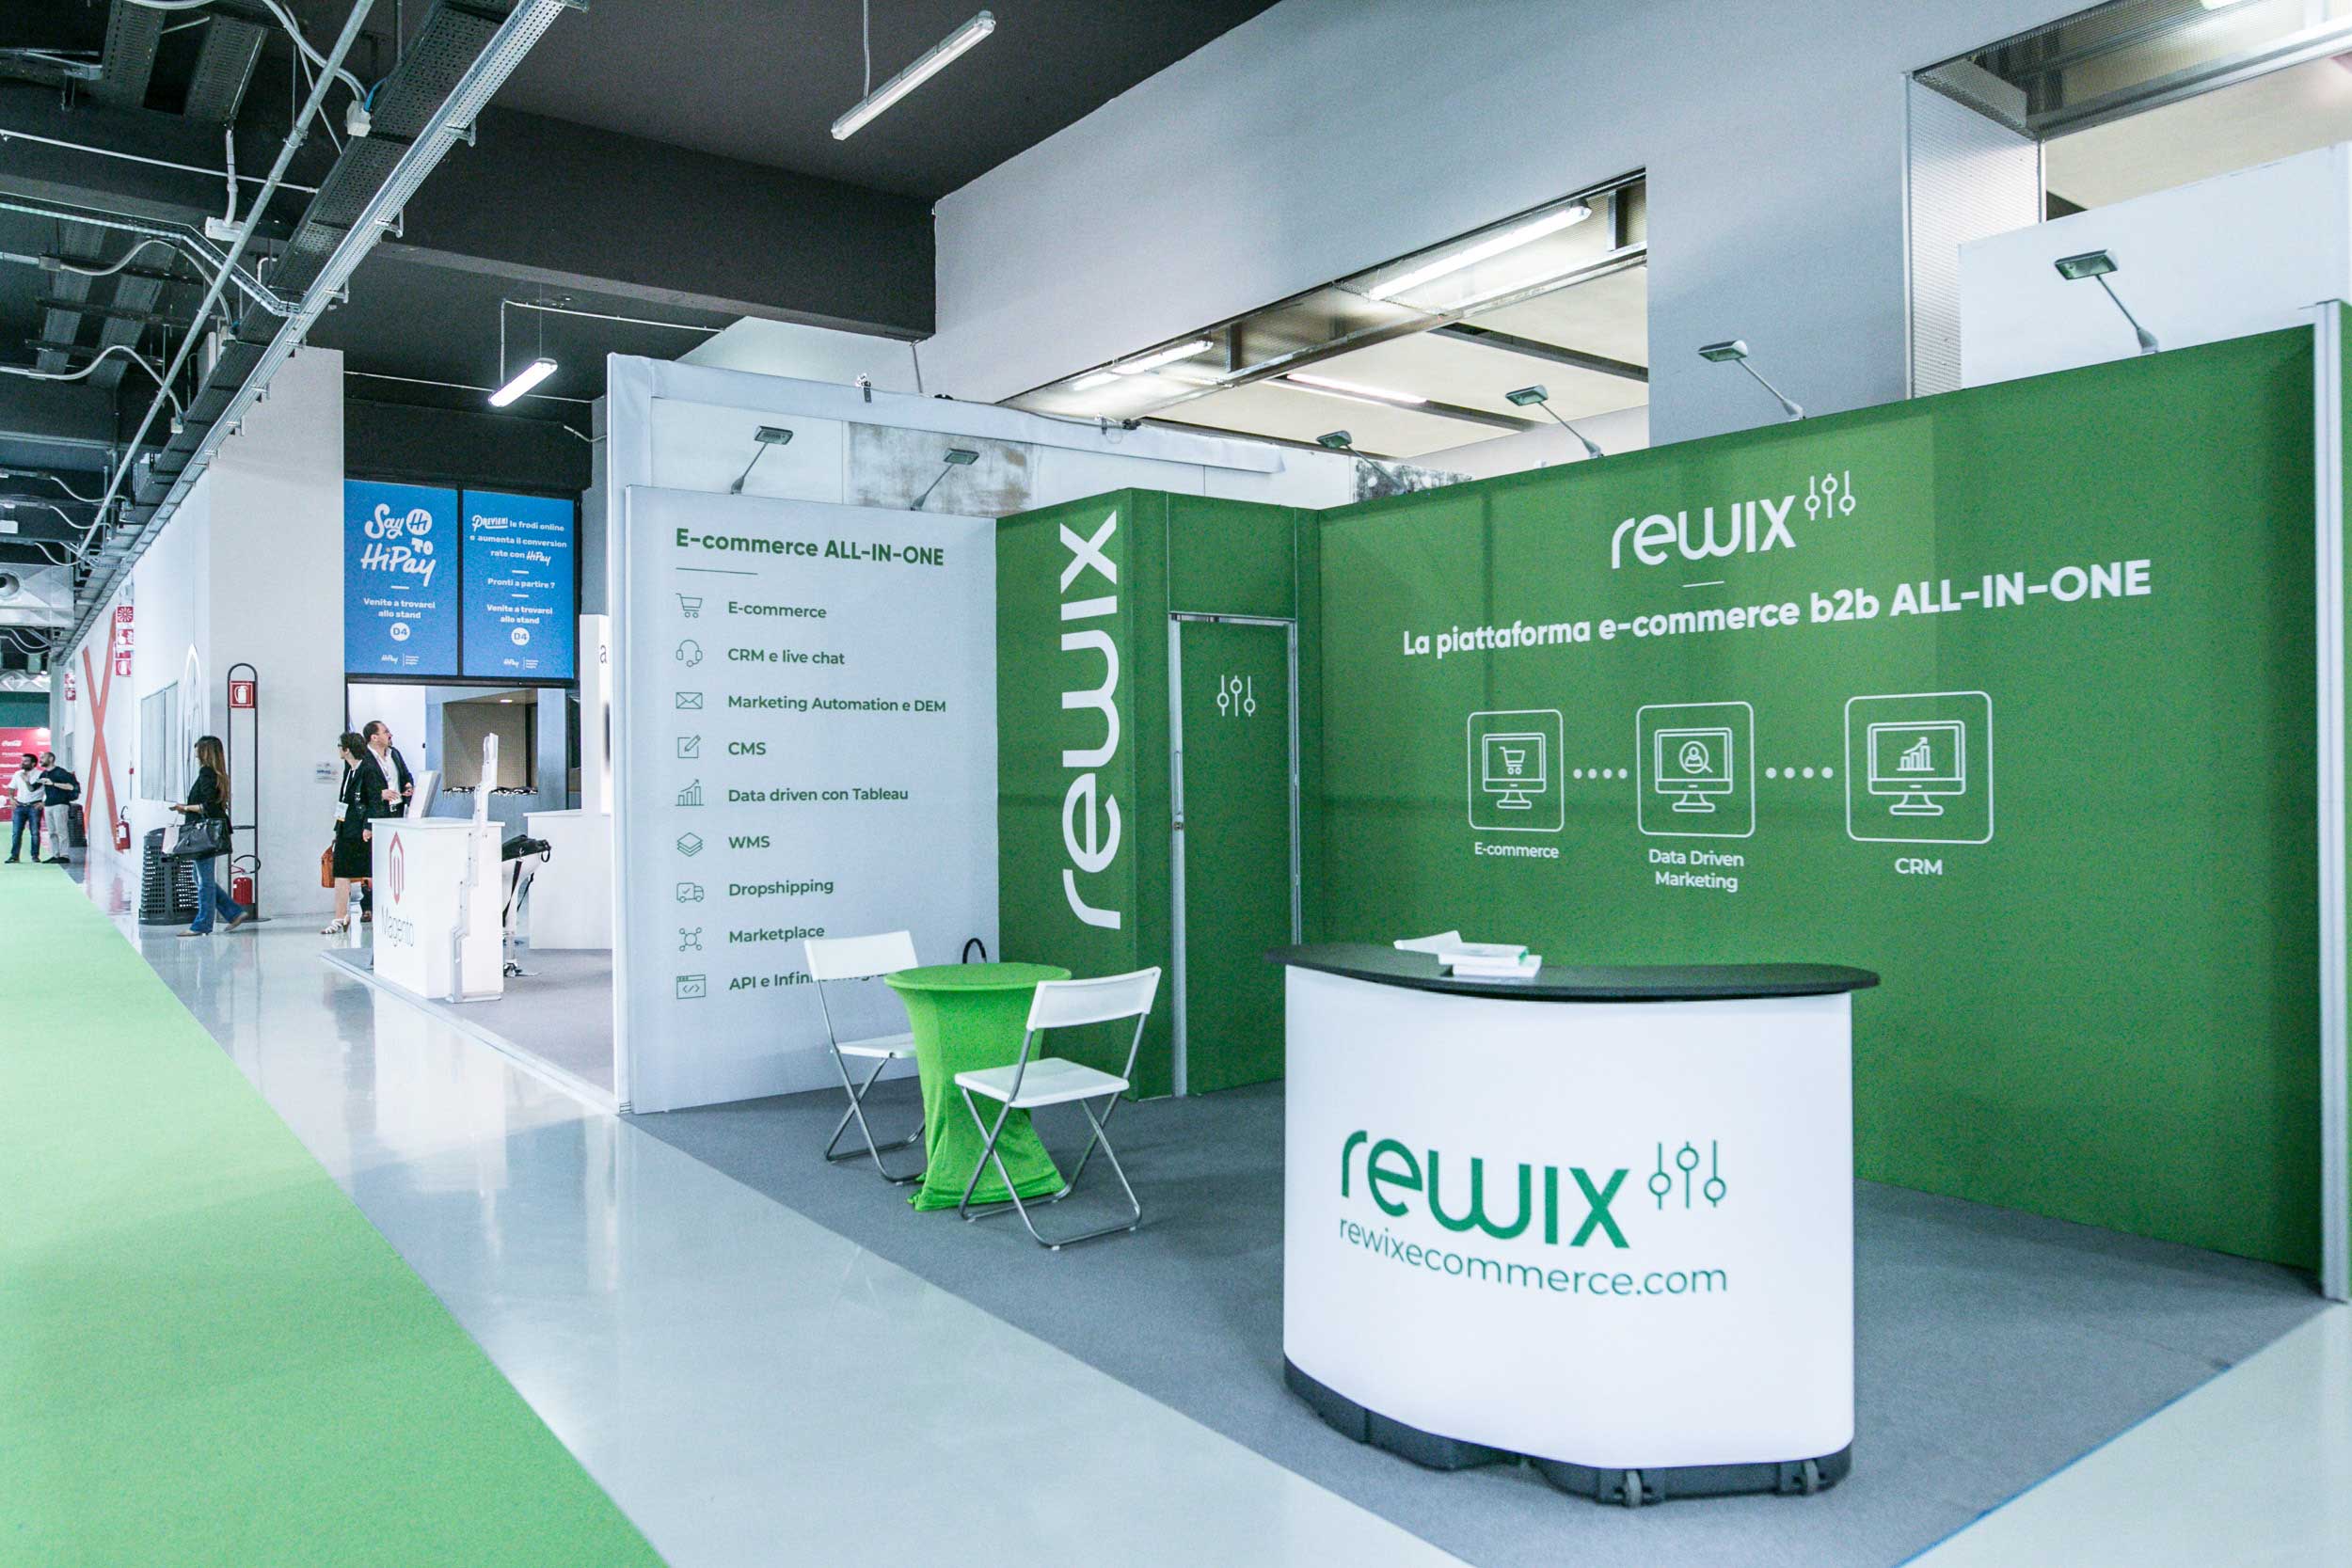 Rewix e-commerce booth at Netcomm forum Milan 2018